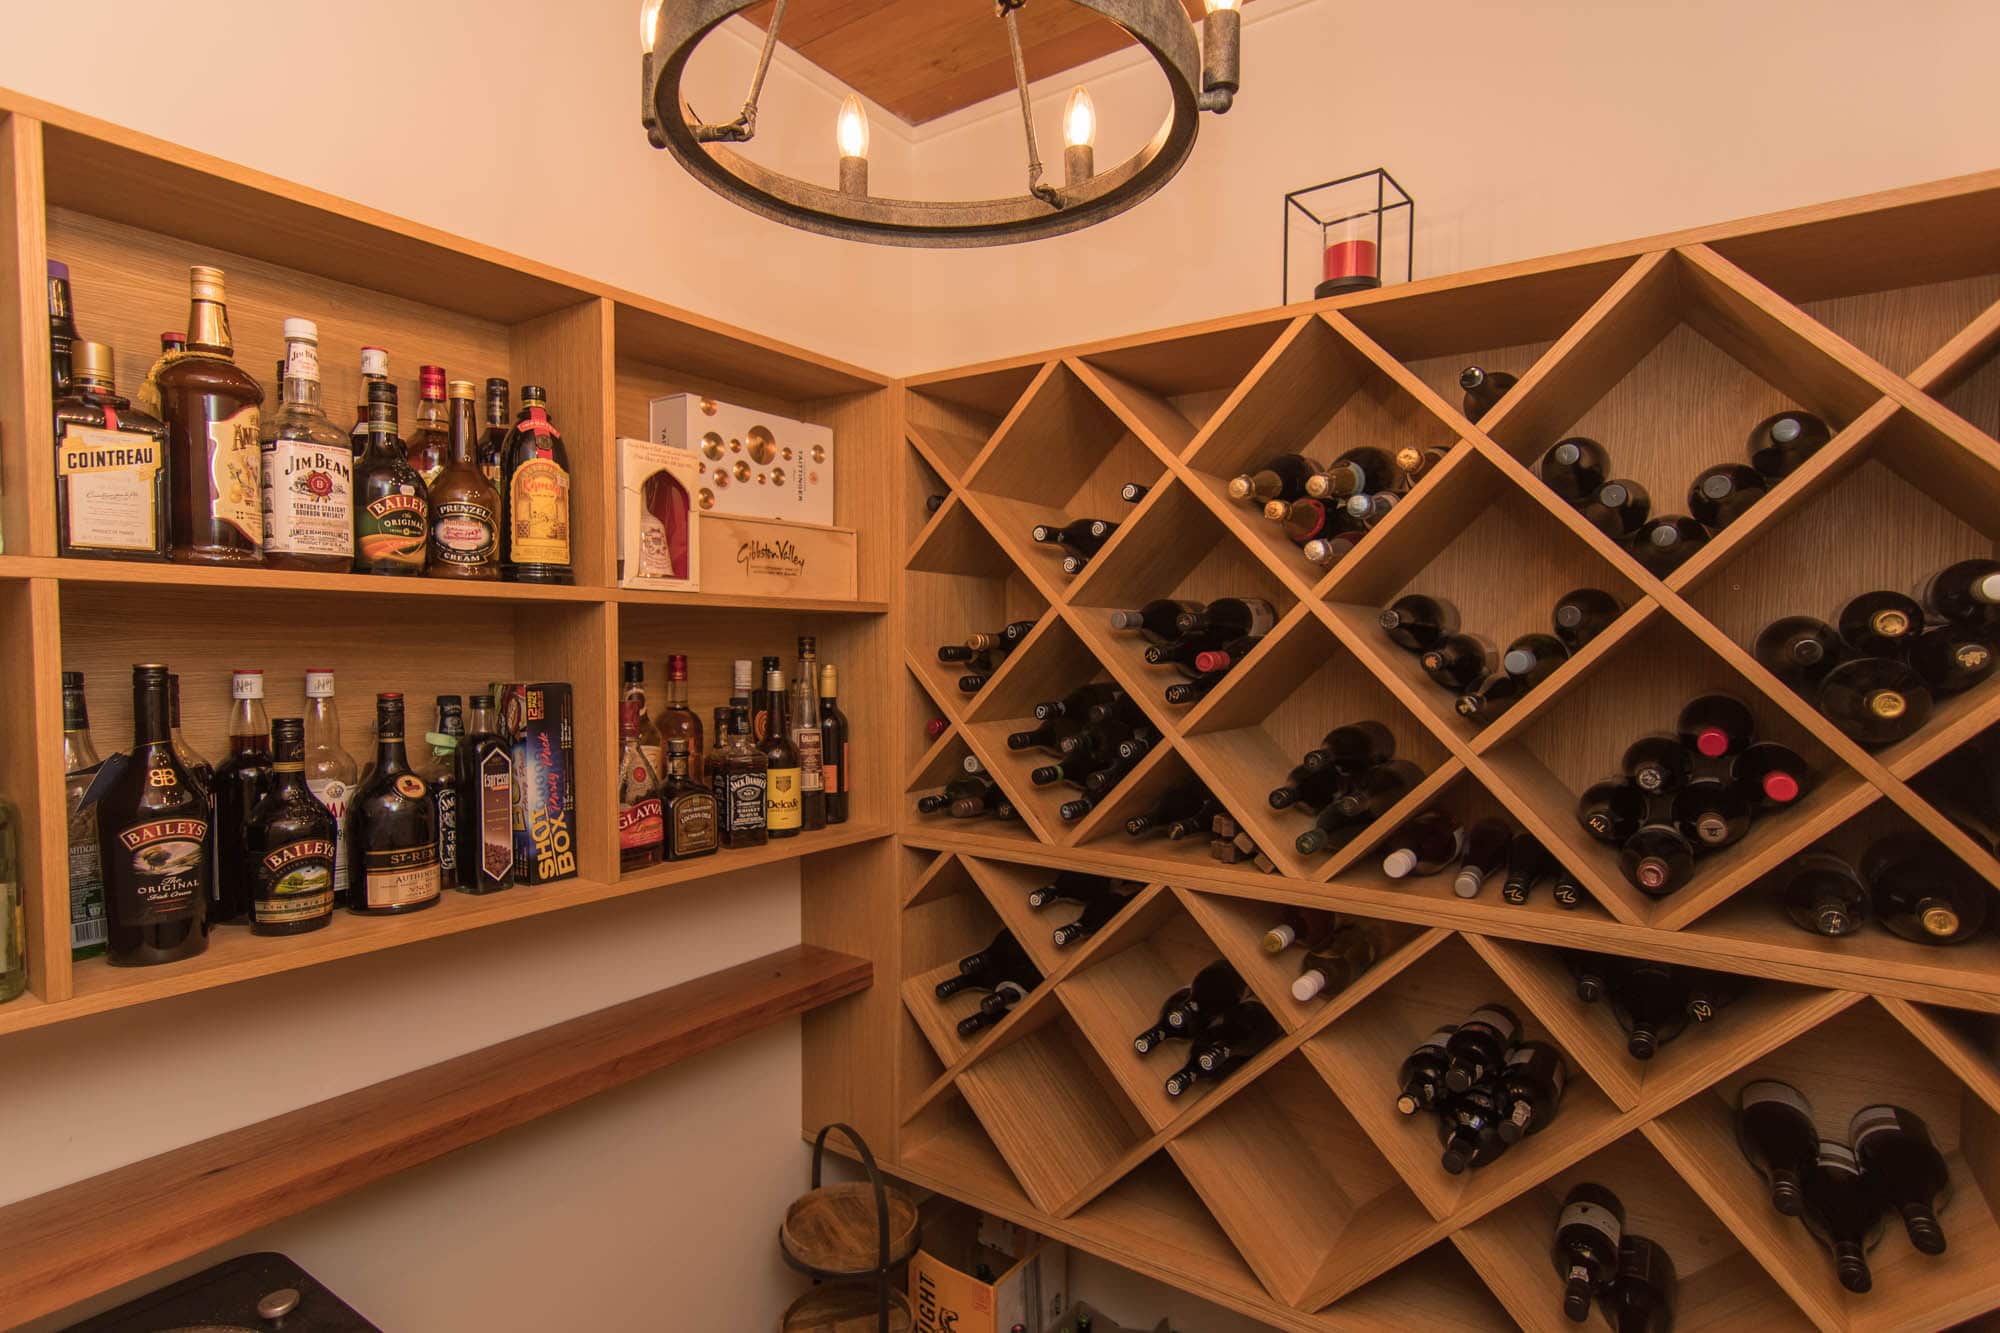  The bespoke wine cellar